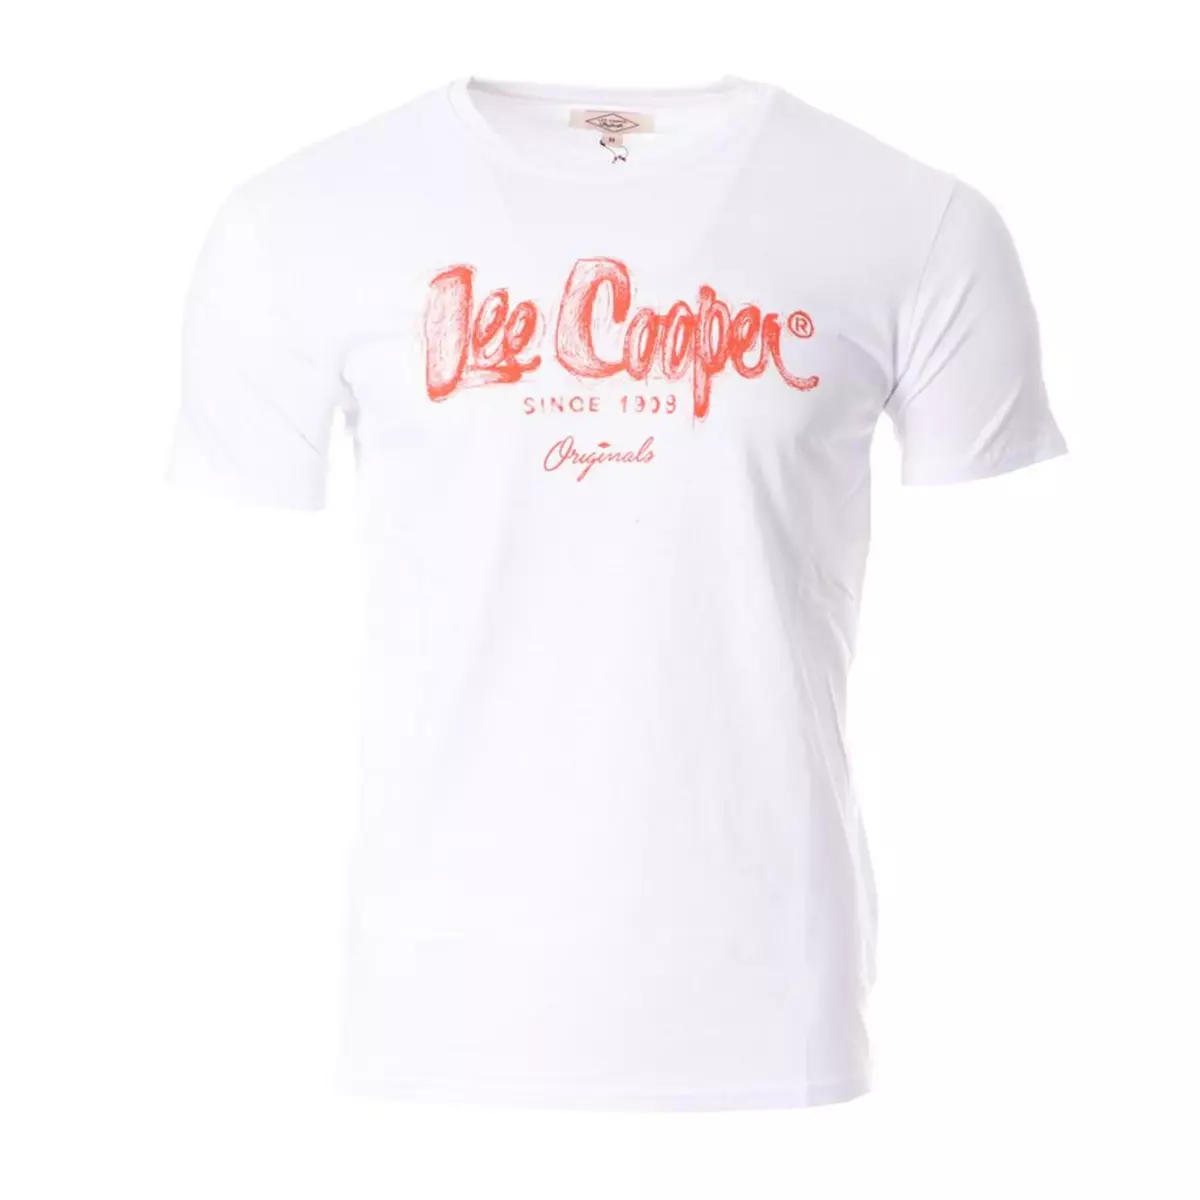 Lee Cooper T-shirt Blanc/Orange Homme Lee Cooper Orex